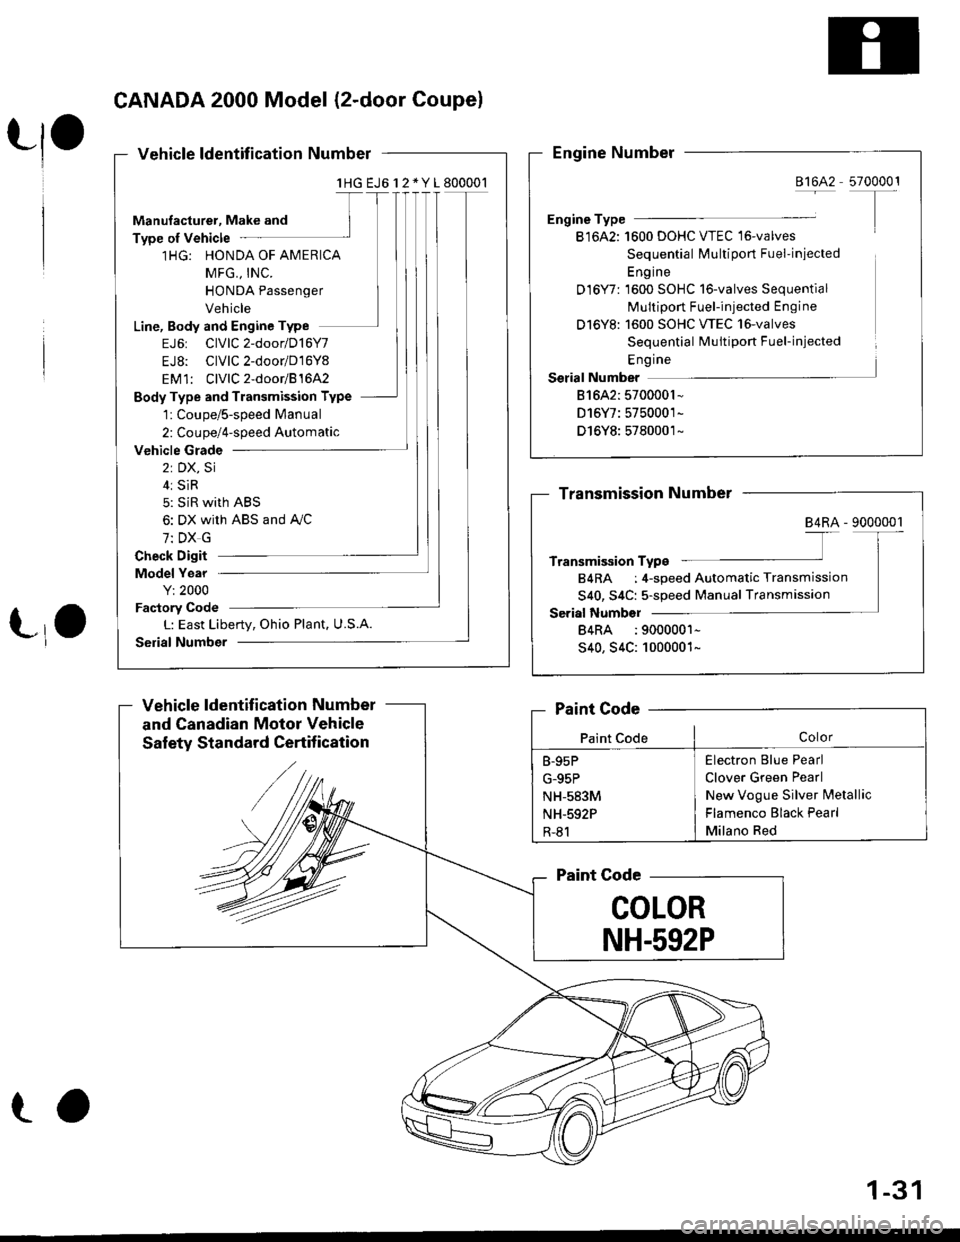 HONDA CIVIC 1996 6.G Owners Guide CANADA 2000 Model (2-door Coupel
Vehicle ldentification Number
lHG EJ6l 2 * Y 1800001
Manufacturer, Make and
Type of Vehicle
1HG: HONDA OF AMERICA
MFG,, INC.
HONDA Passenger
Vehicle
Line, Body and En